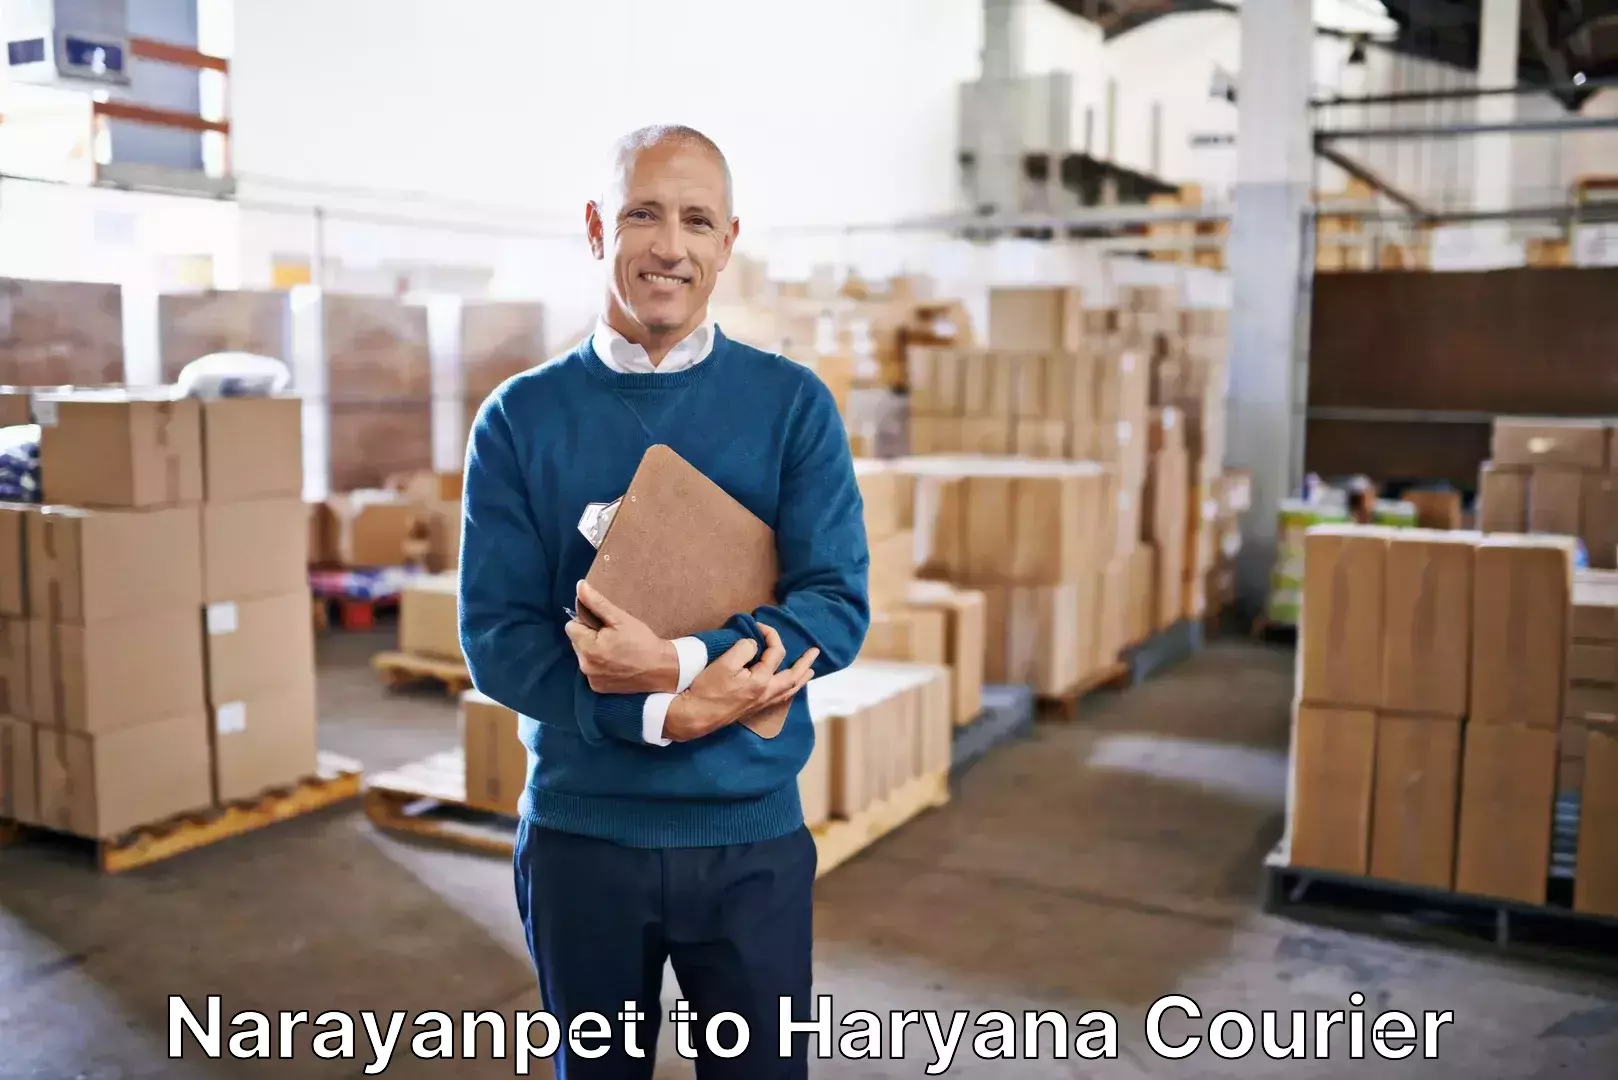 Luggage shipment specialists Narayanpet to Chirya